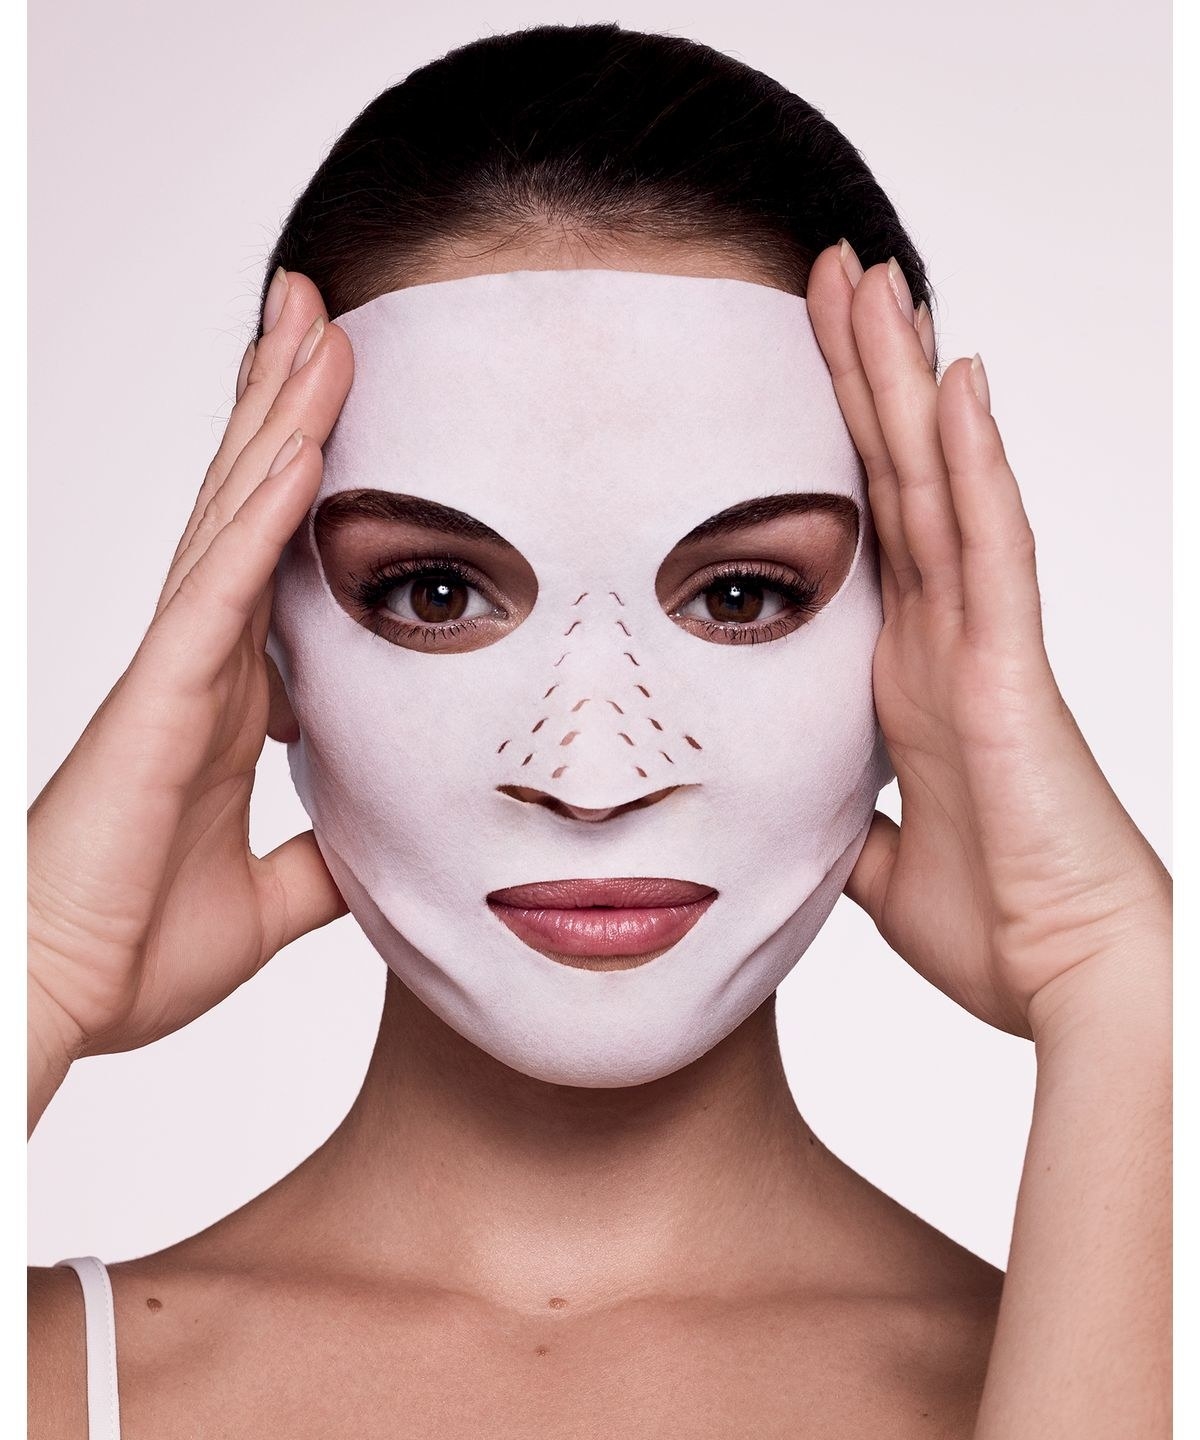 Со скольки можно маски для лица. Маска для лица. М̆̈ӑ̈с̆̈к̆̈й̈ д̆̈л̆̈я̆̈ л̆̈й̈ц̆̈ӑ̈. Женщина в маске для лица. Тканевые маски для лица.